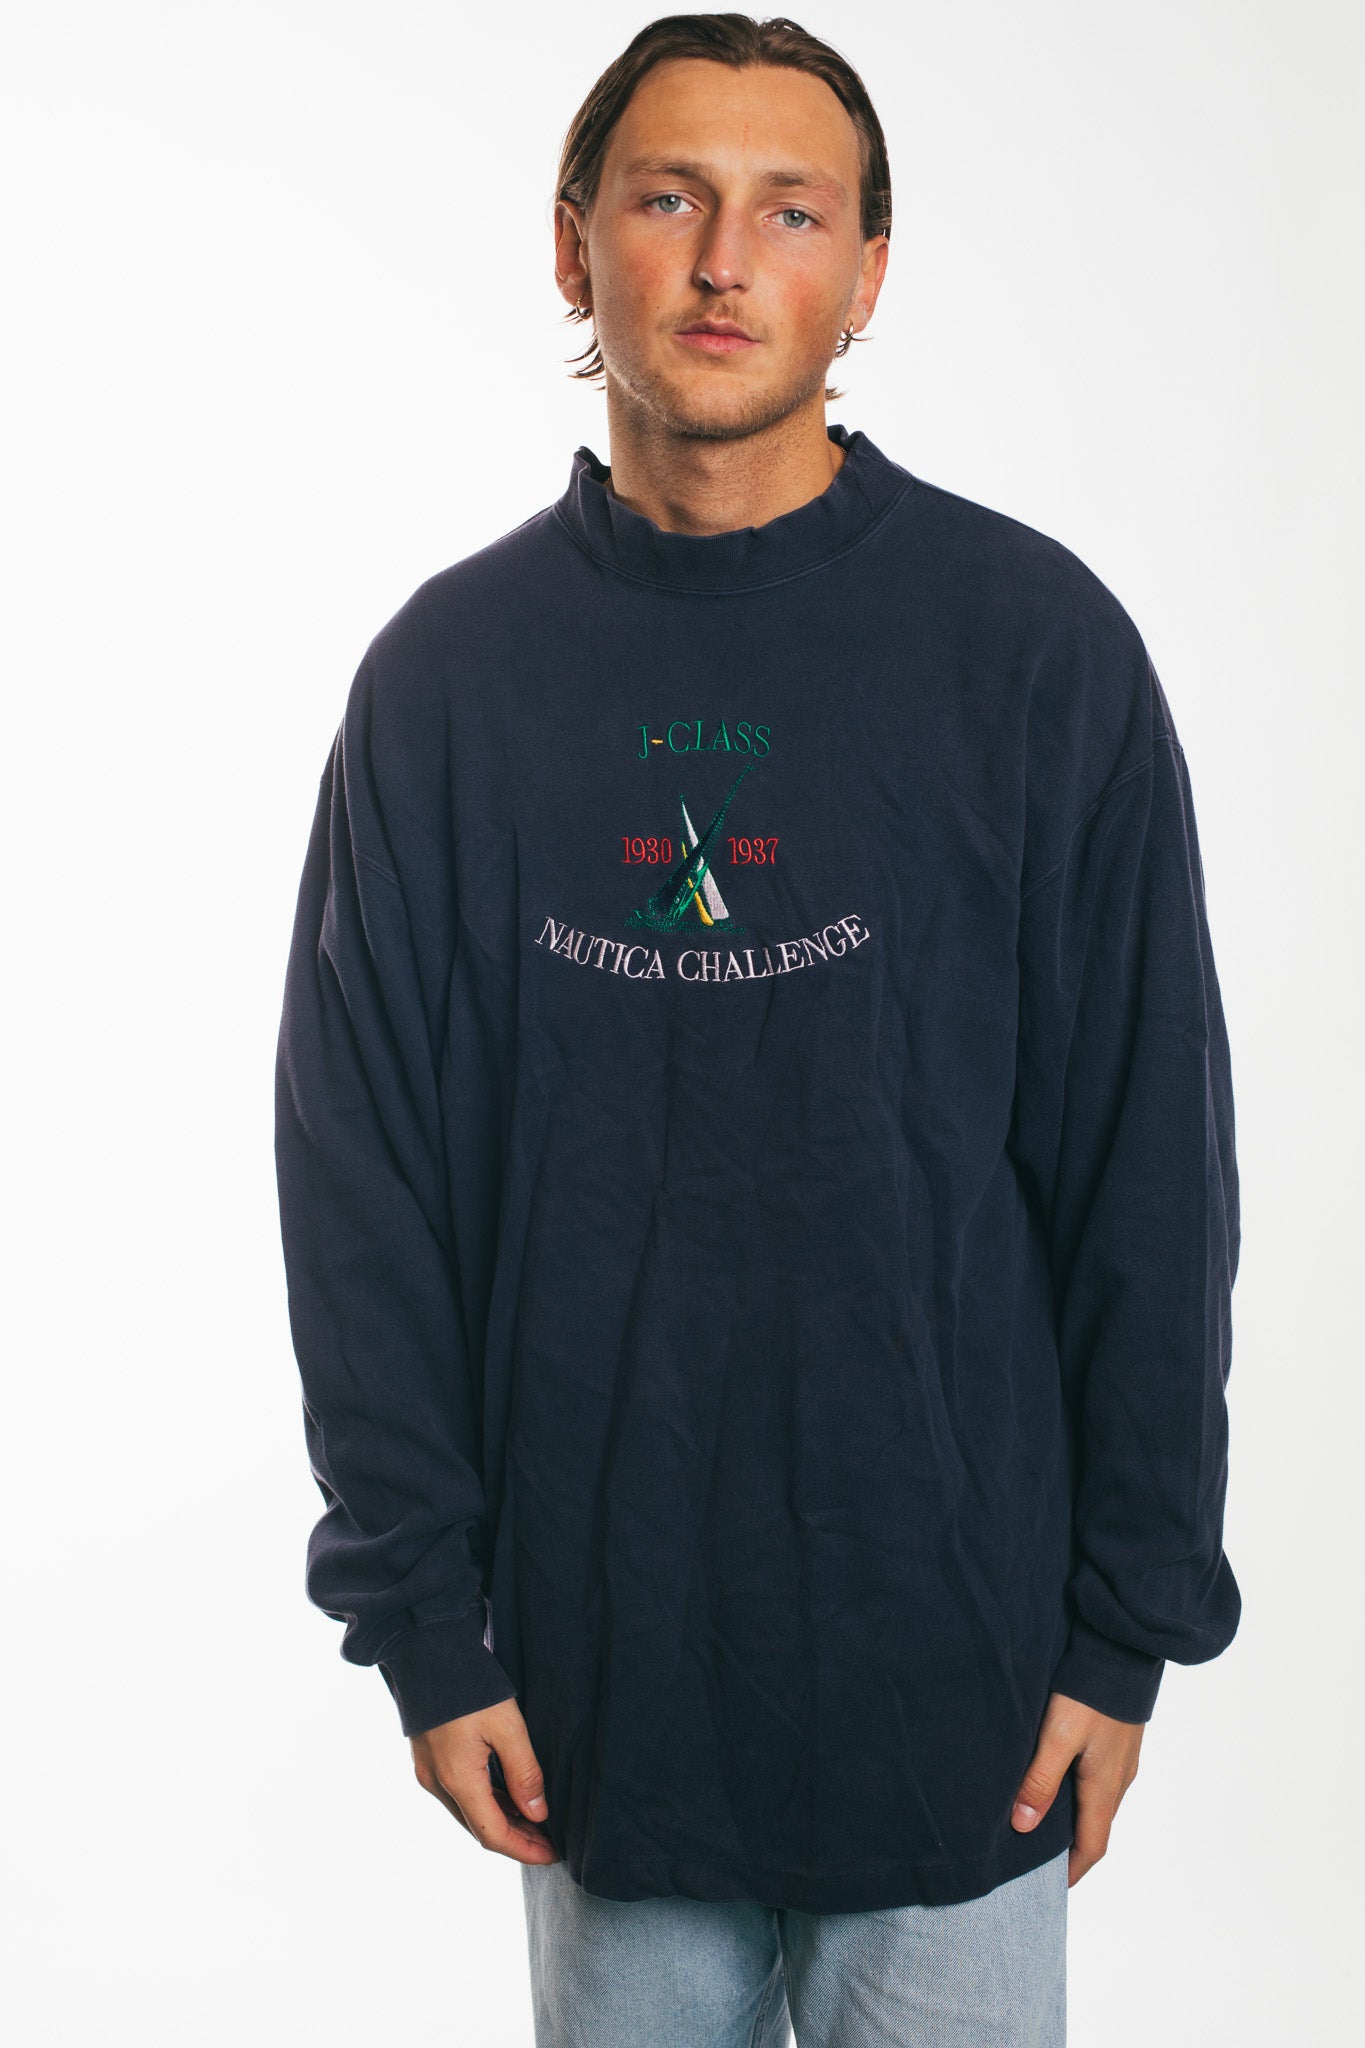 Nautica Challenge - Sweatshirt (XXL)